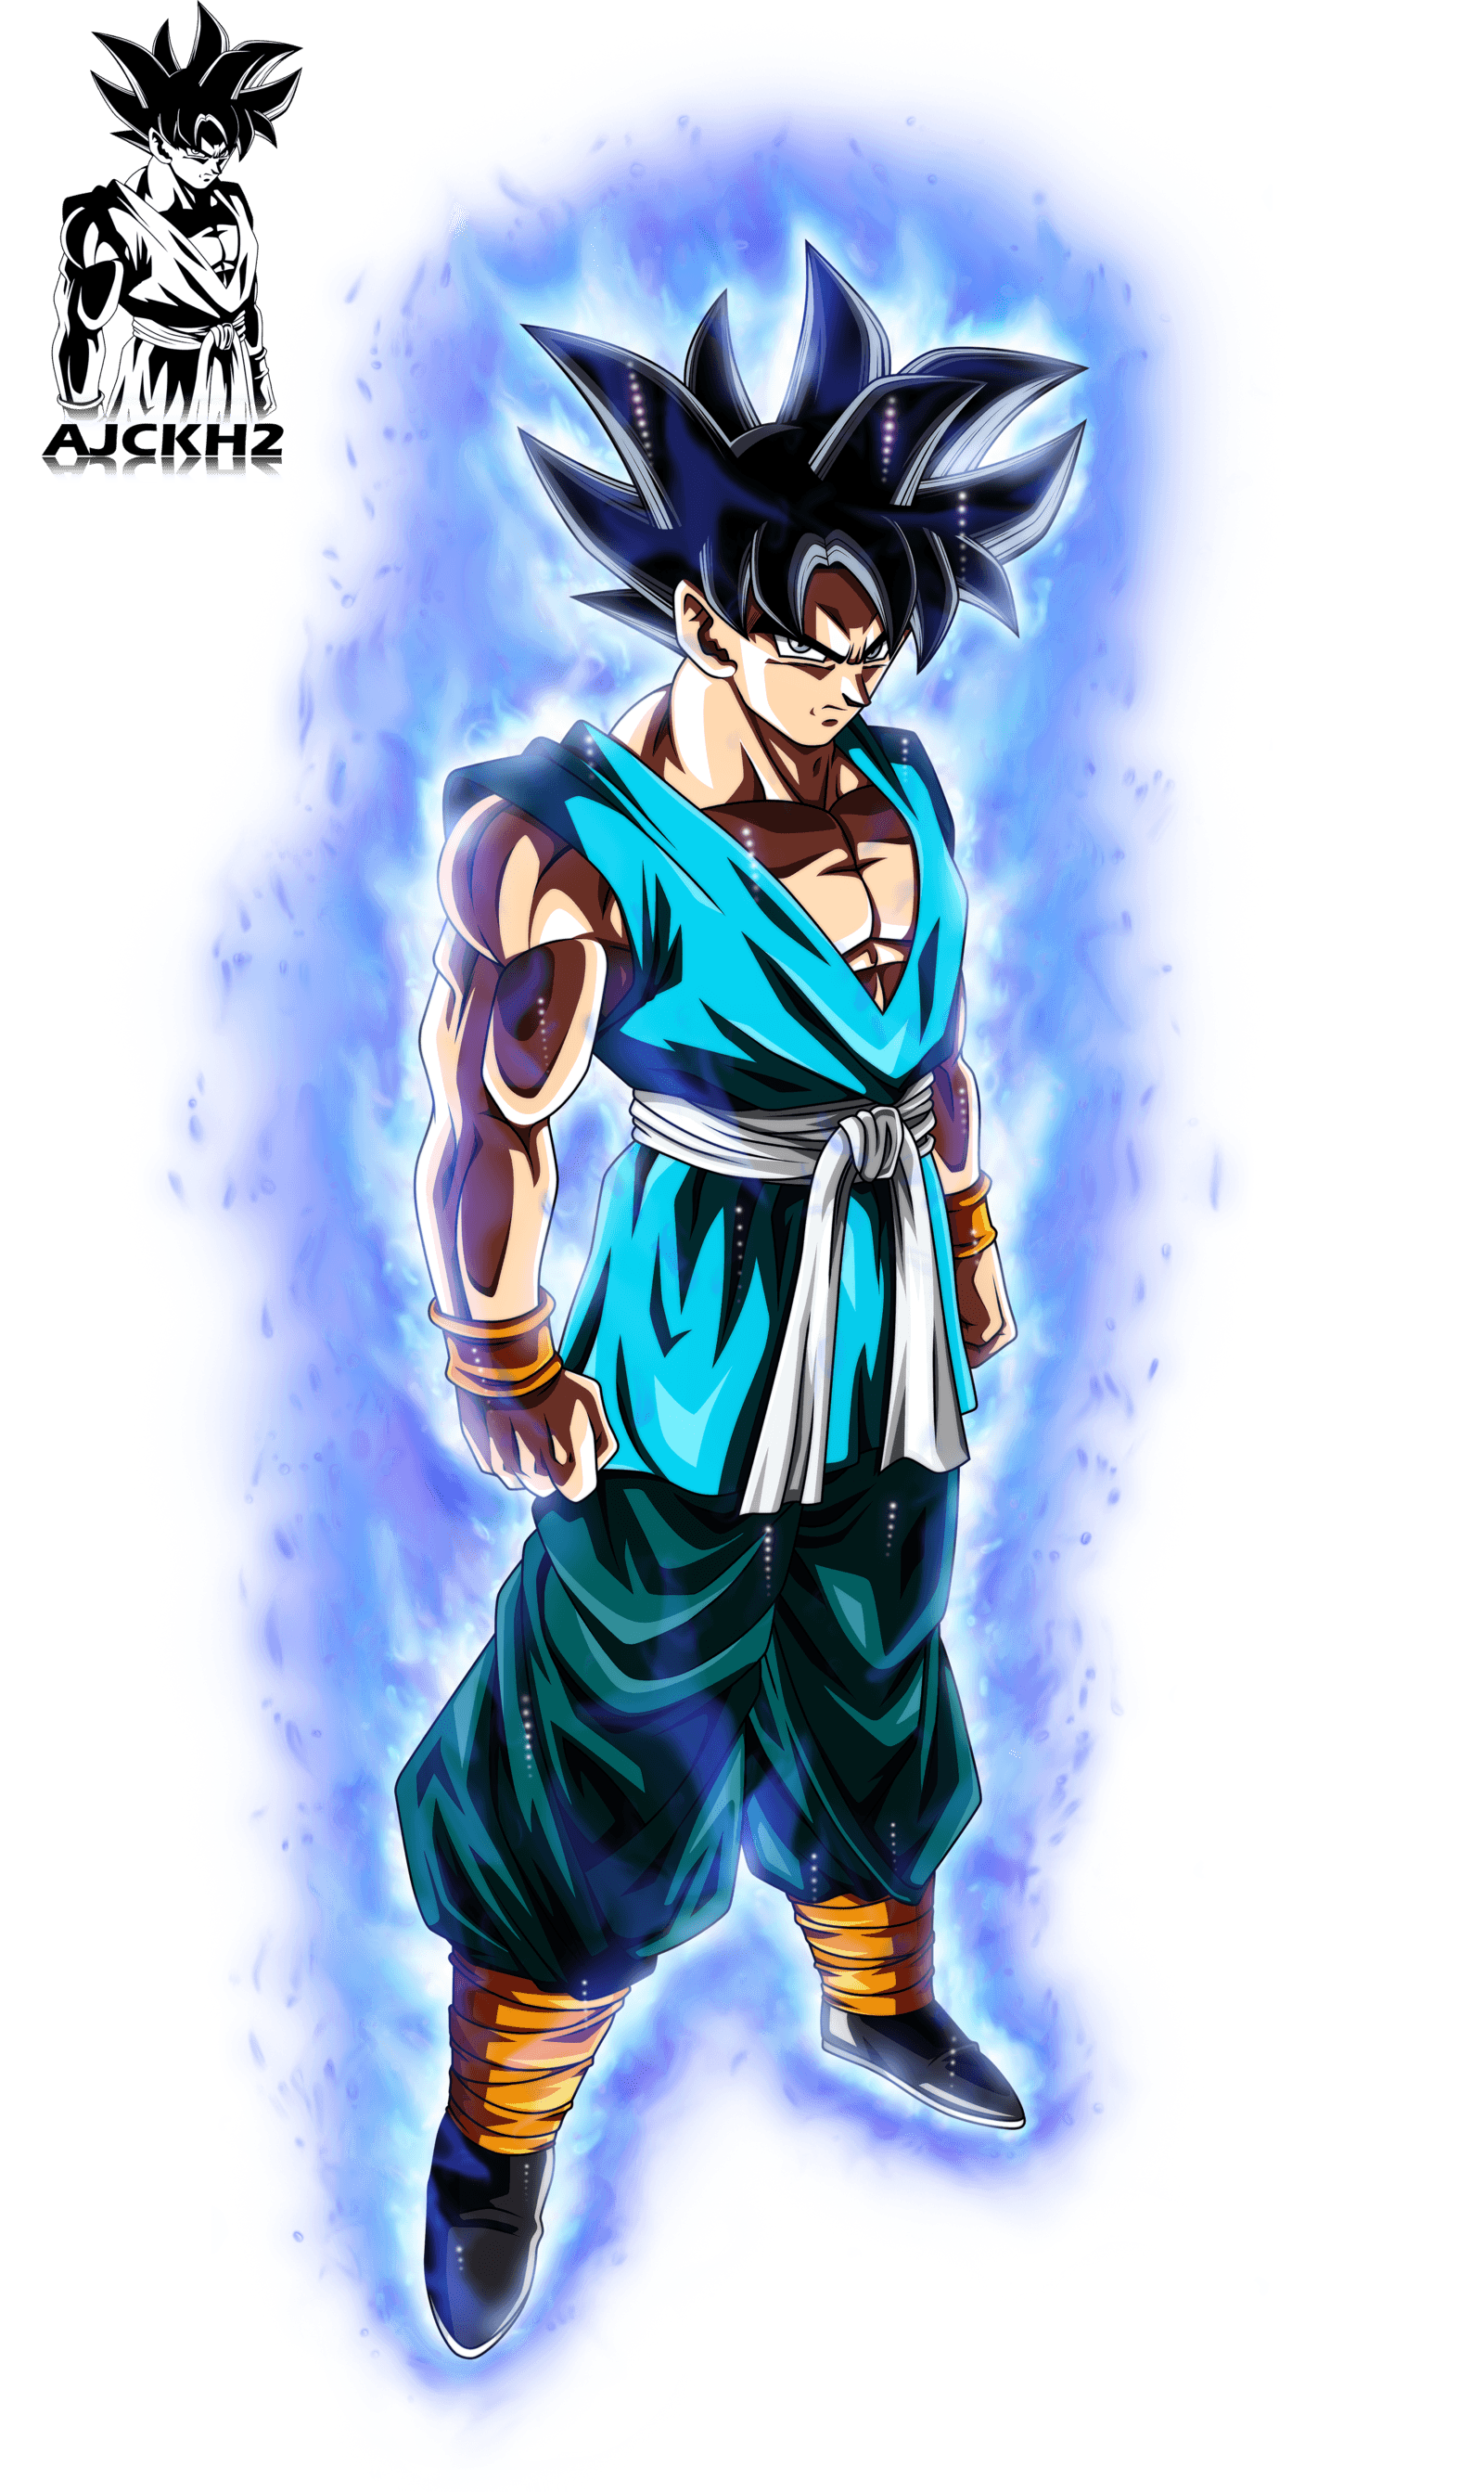 Goku Mastered Ultra Instinct in Dragon Ball Super Wallpaper